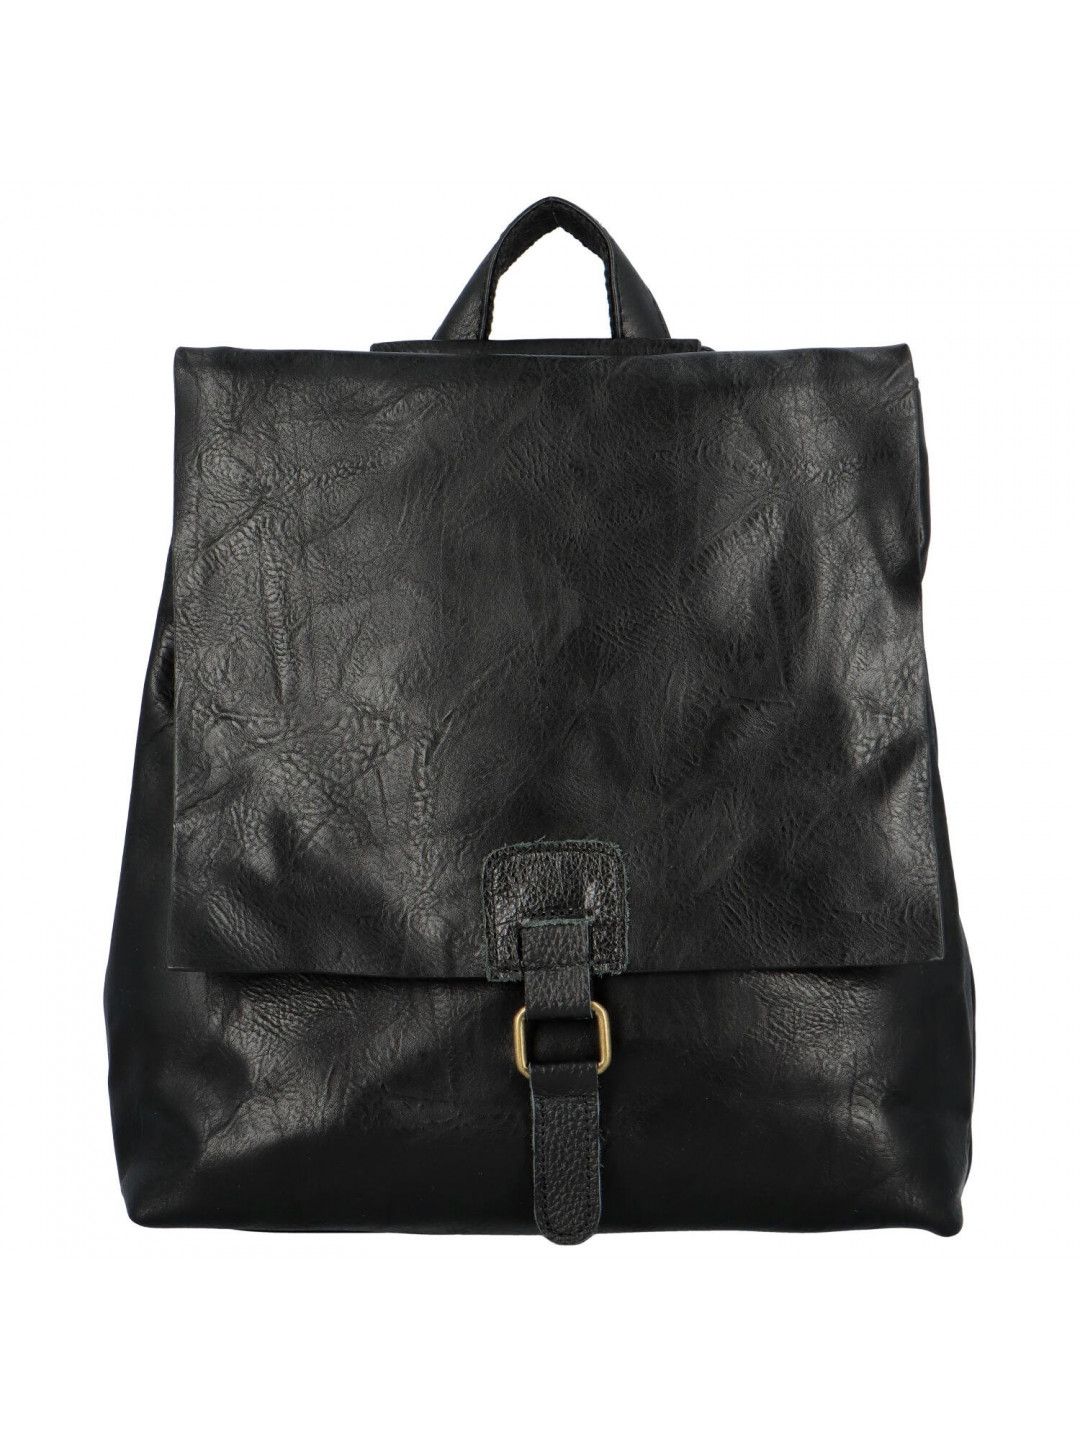 Dámský kabelko batoh černý – Paolo bags Olefir